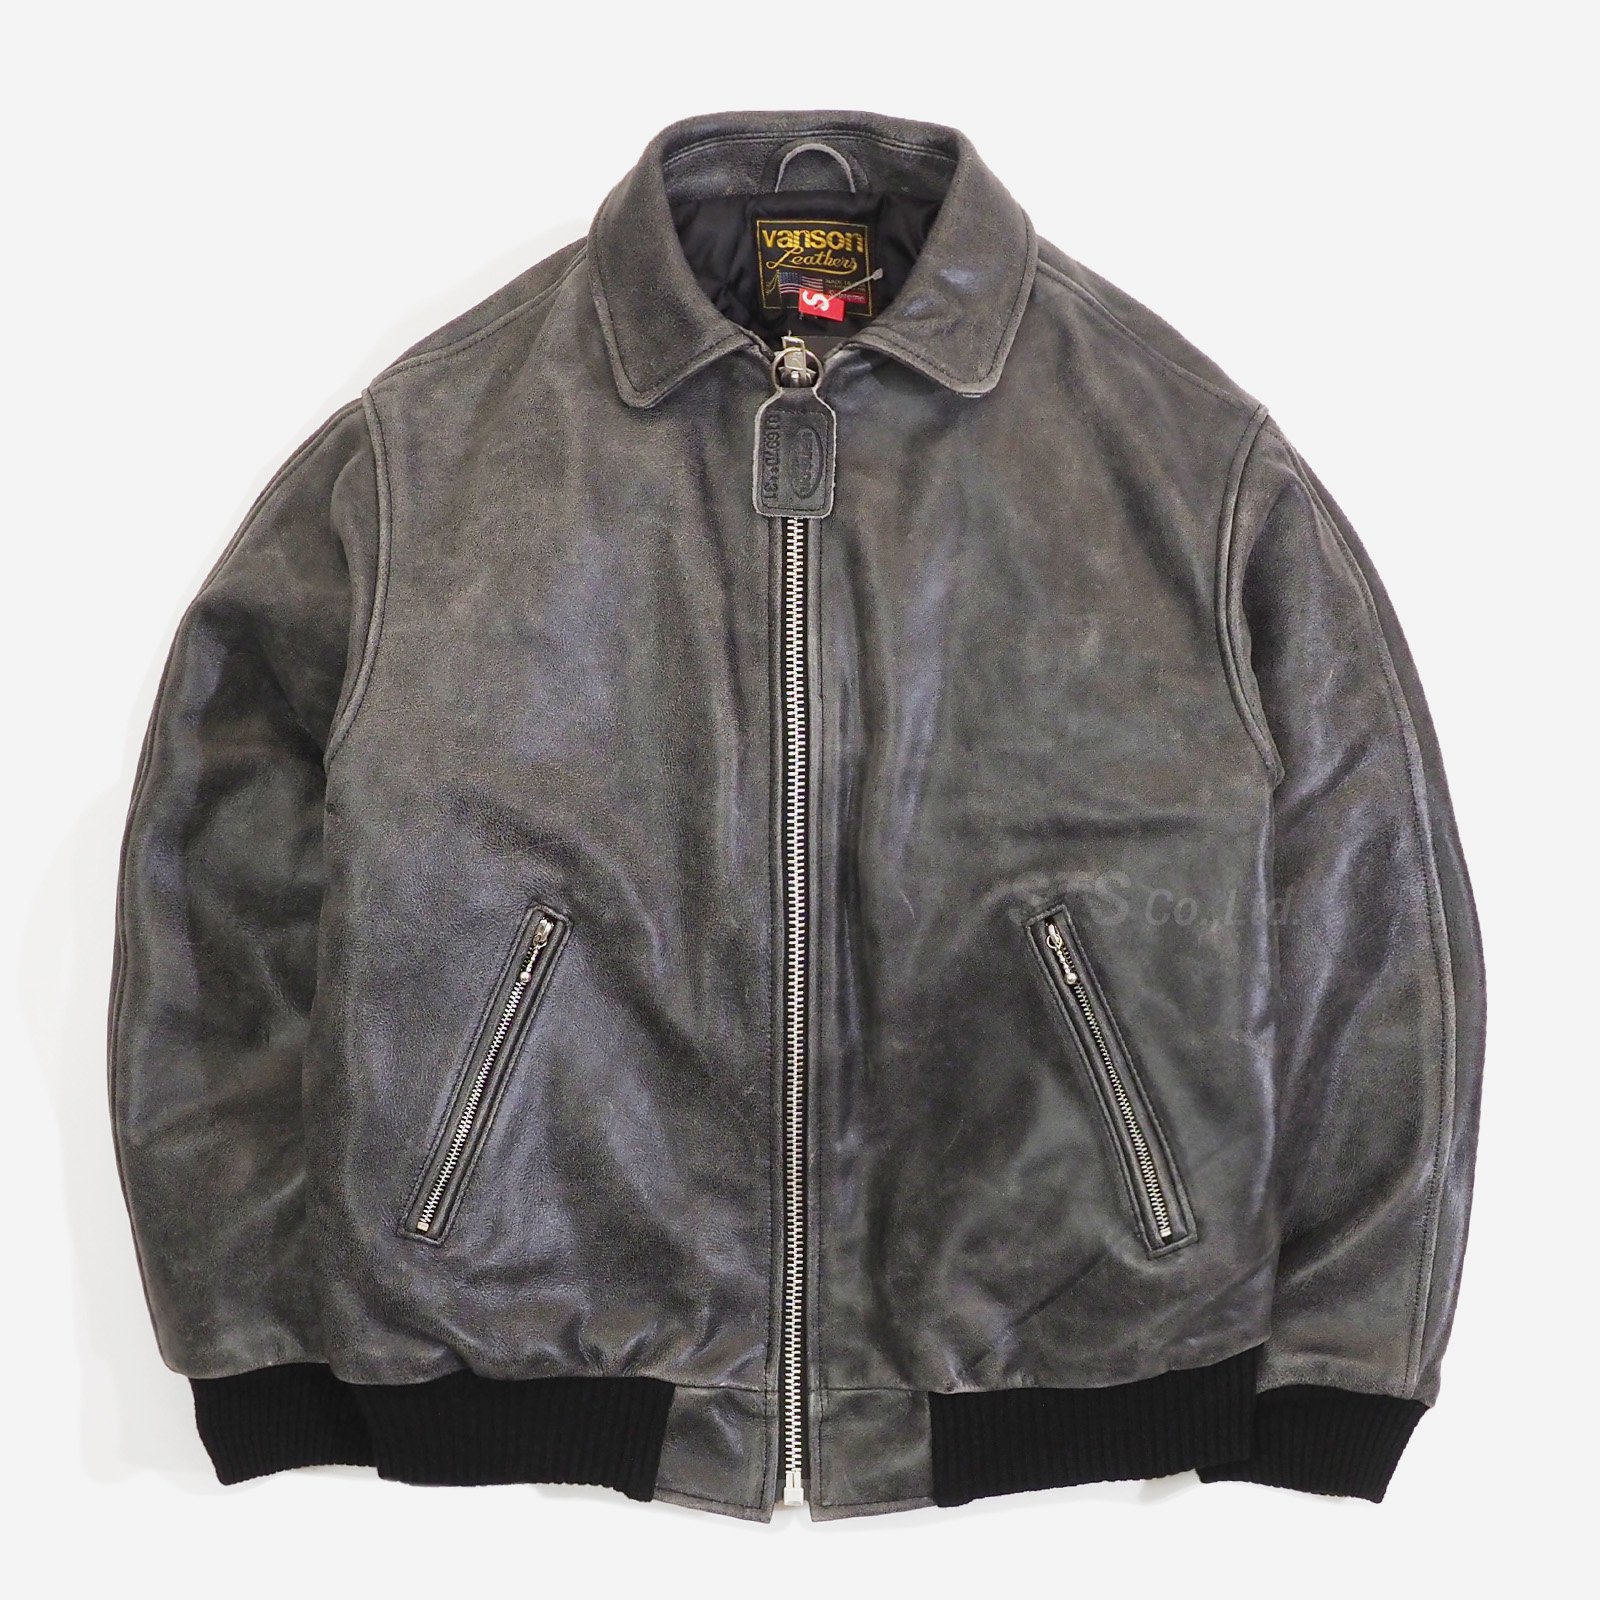 supreme vanson worn leather jacke - レザージャケット